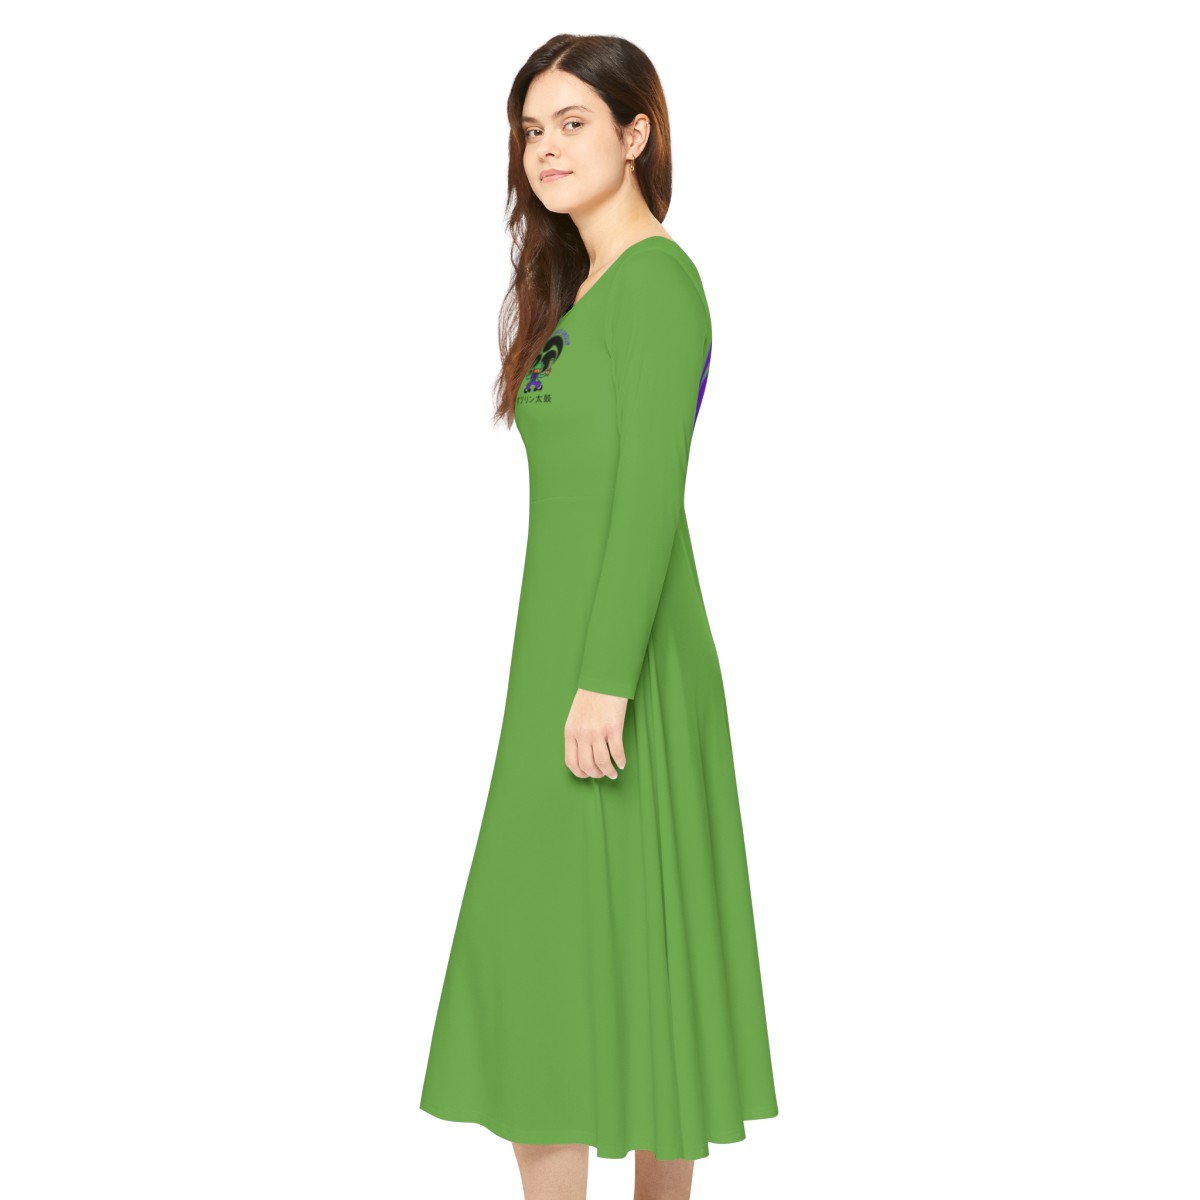 Women's Long Sleeve Dress product thumbnail image